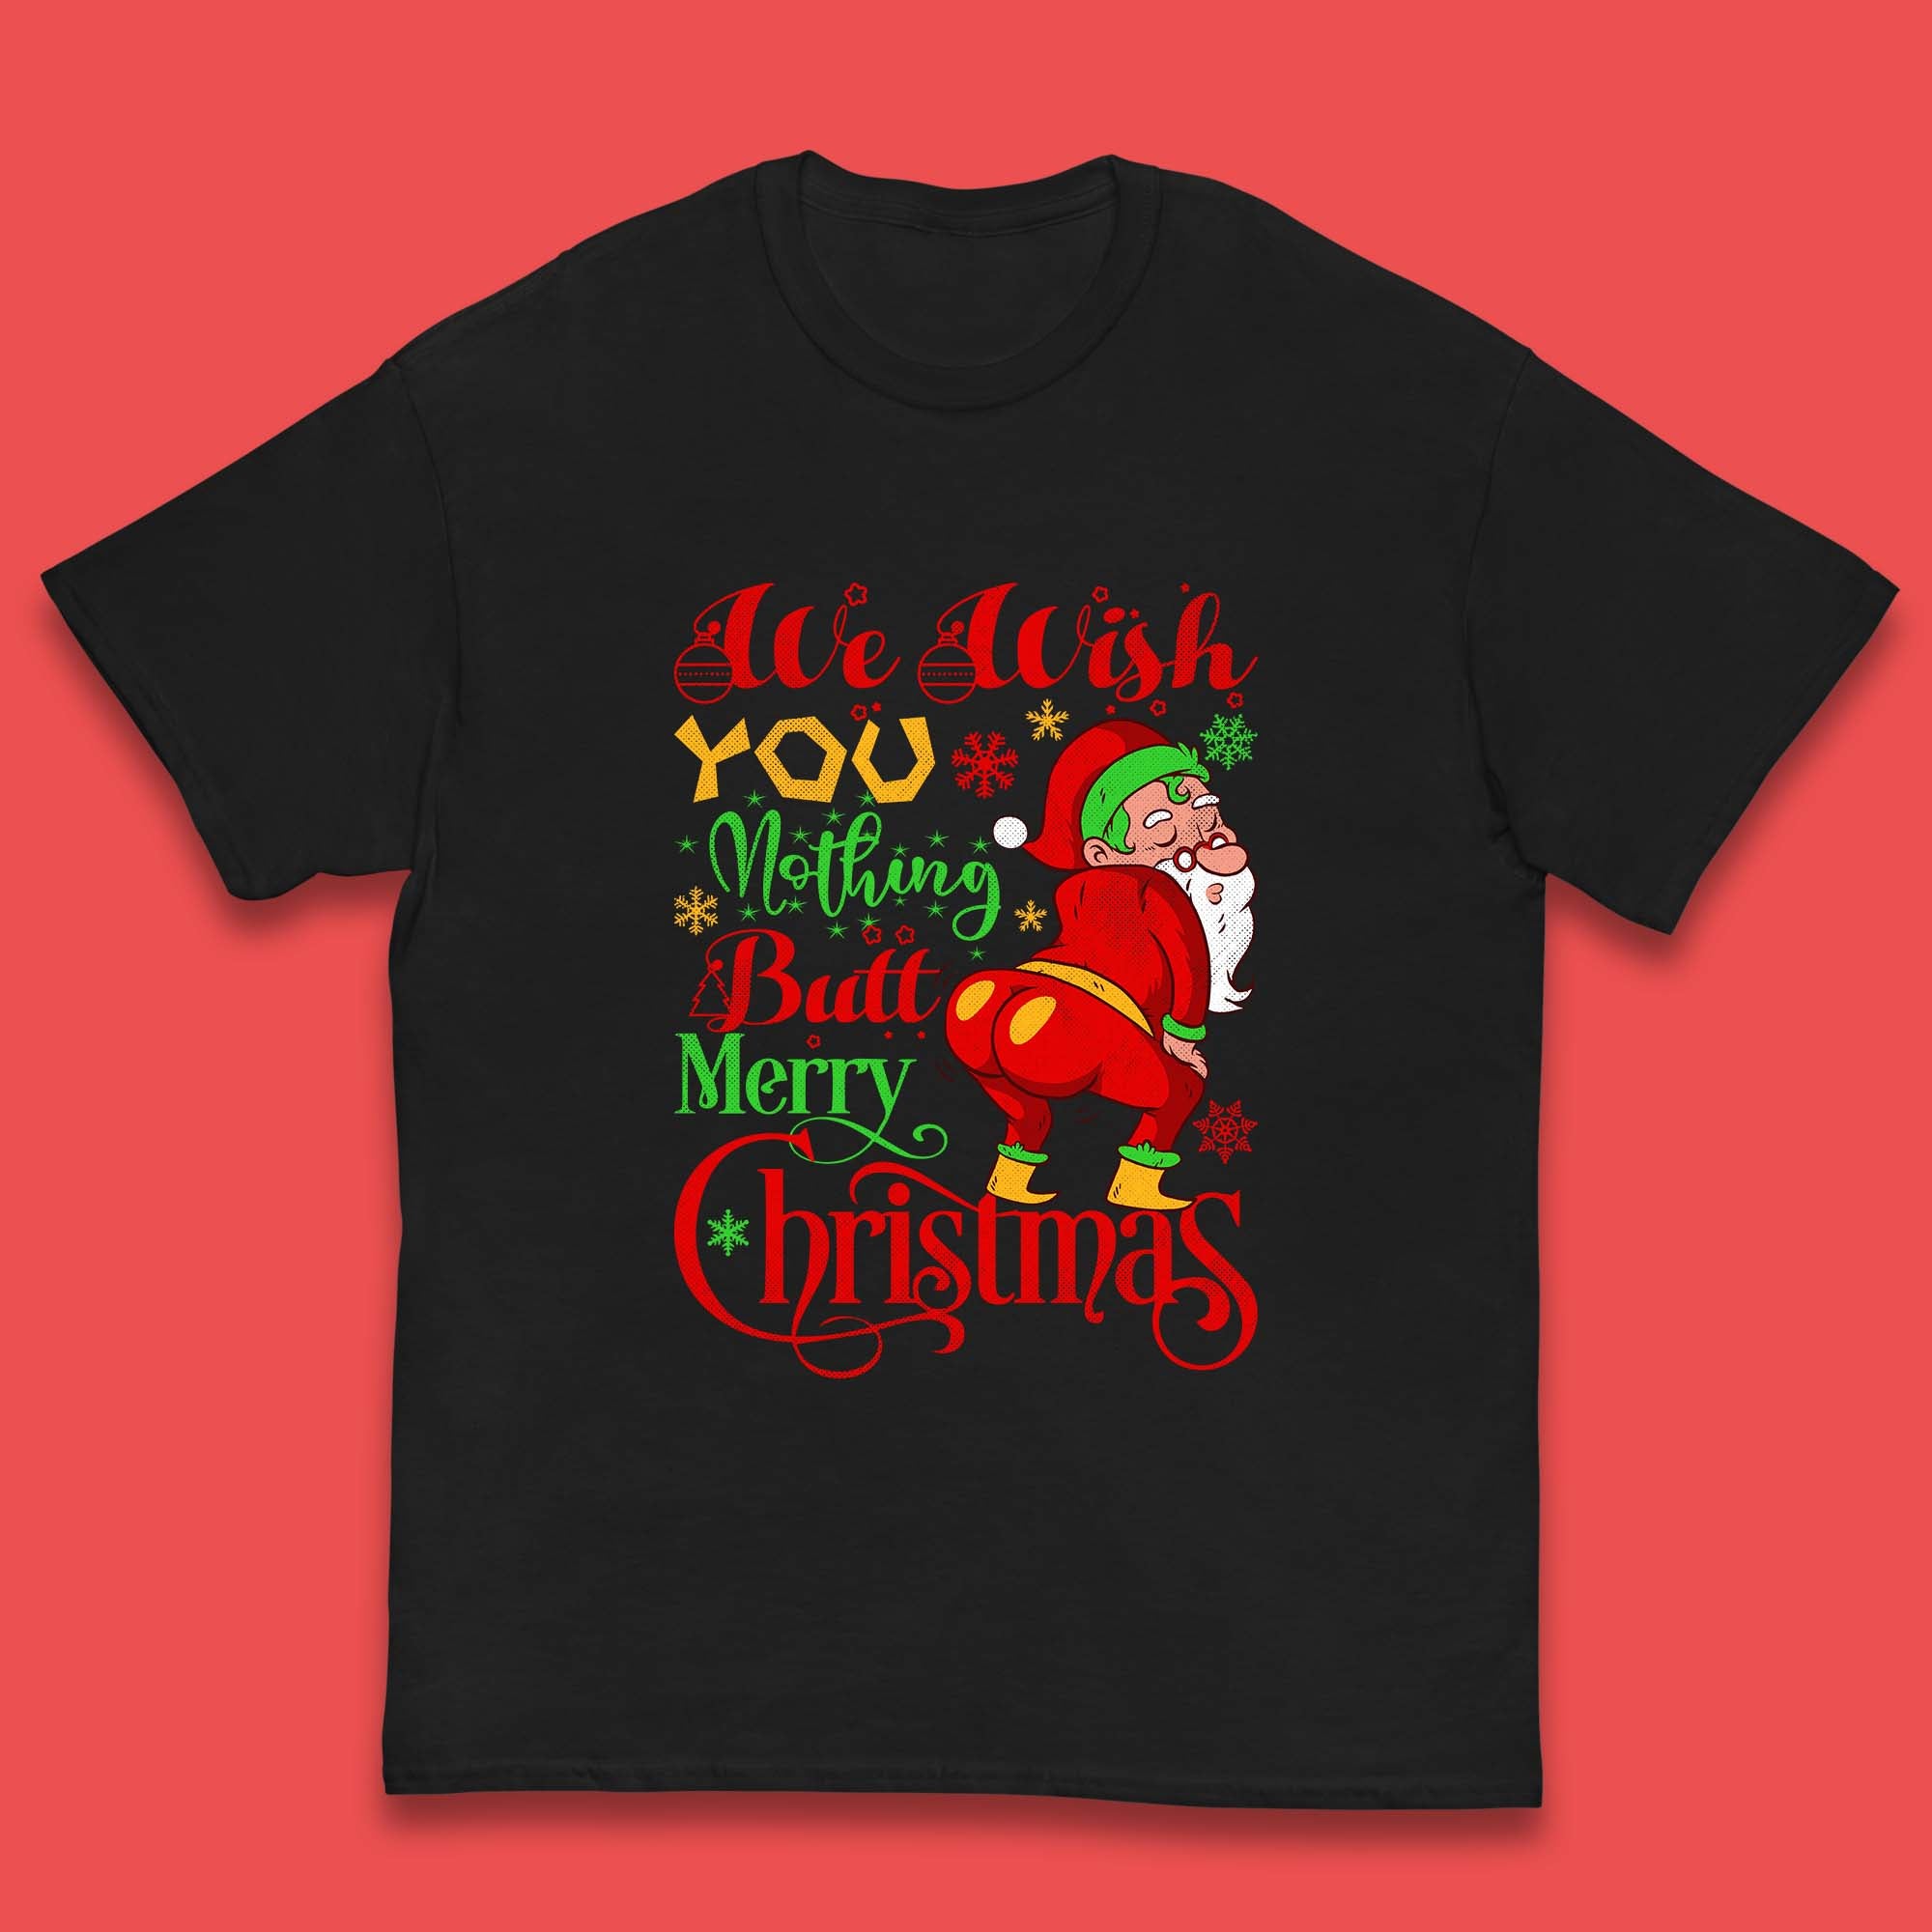 We Wish You Nothing Butt Merry Christmas Funny Naughty Santa Claus Xmas Kids T Shirt